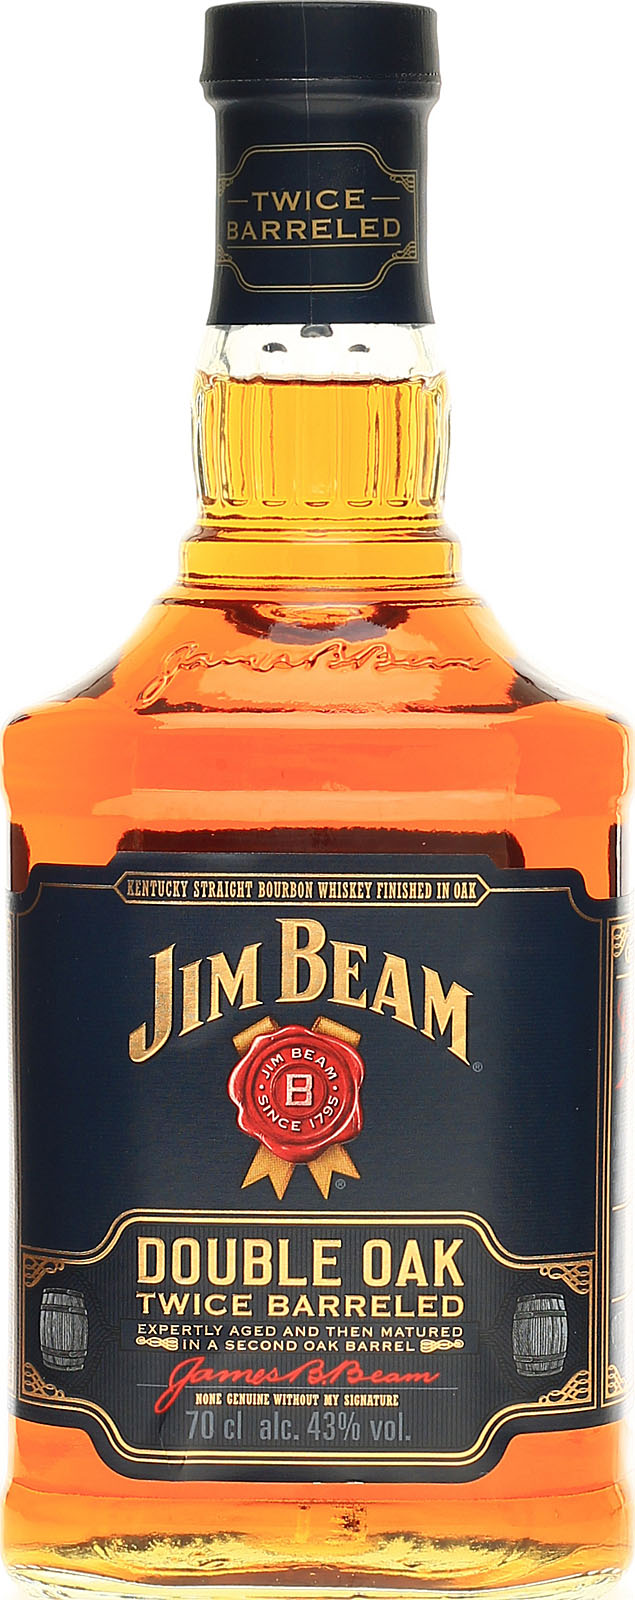 Jim Beam Double Oak Twice Sh bei uns im Barreled Whisky